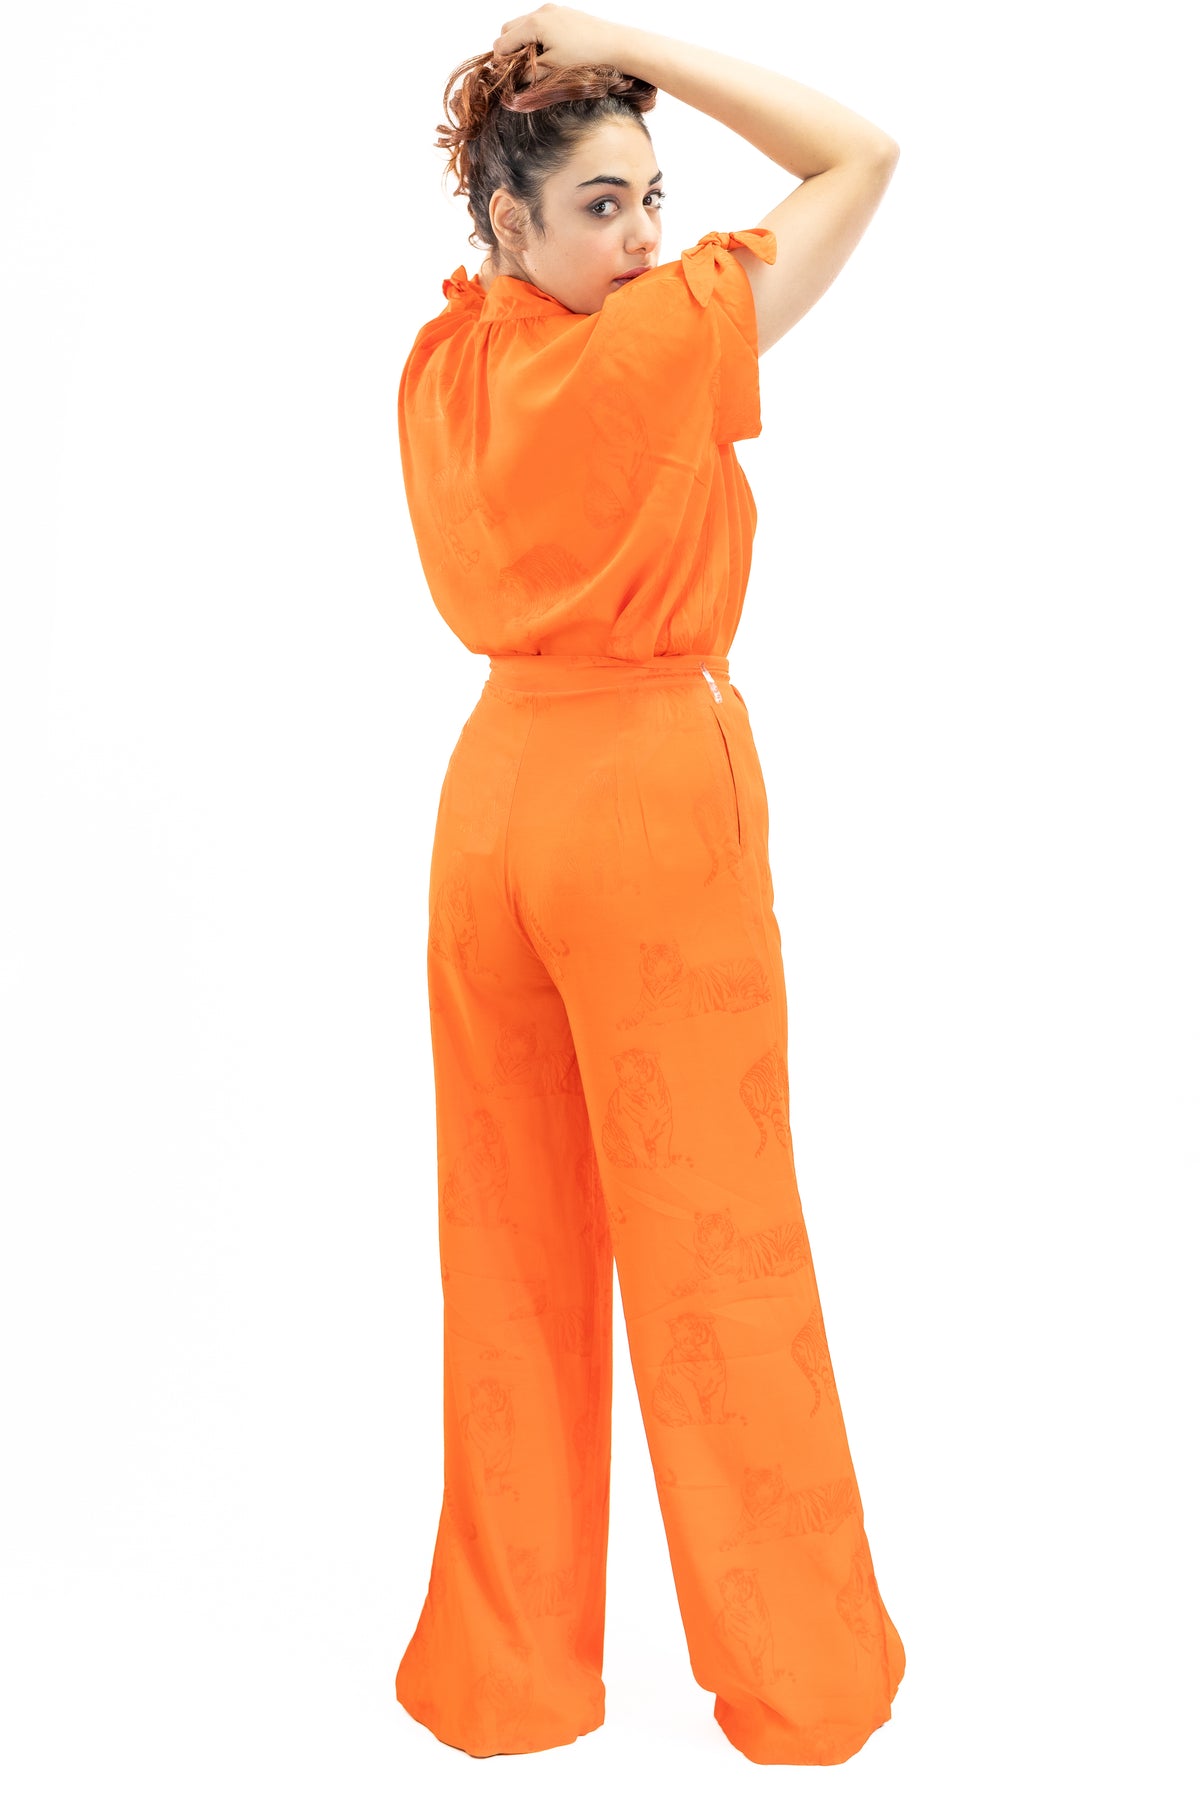 Flared Orange pants